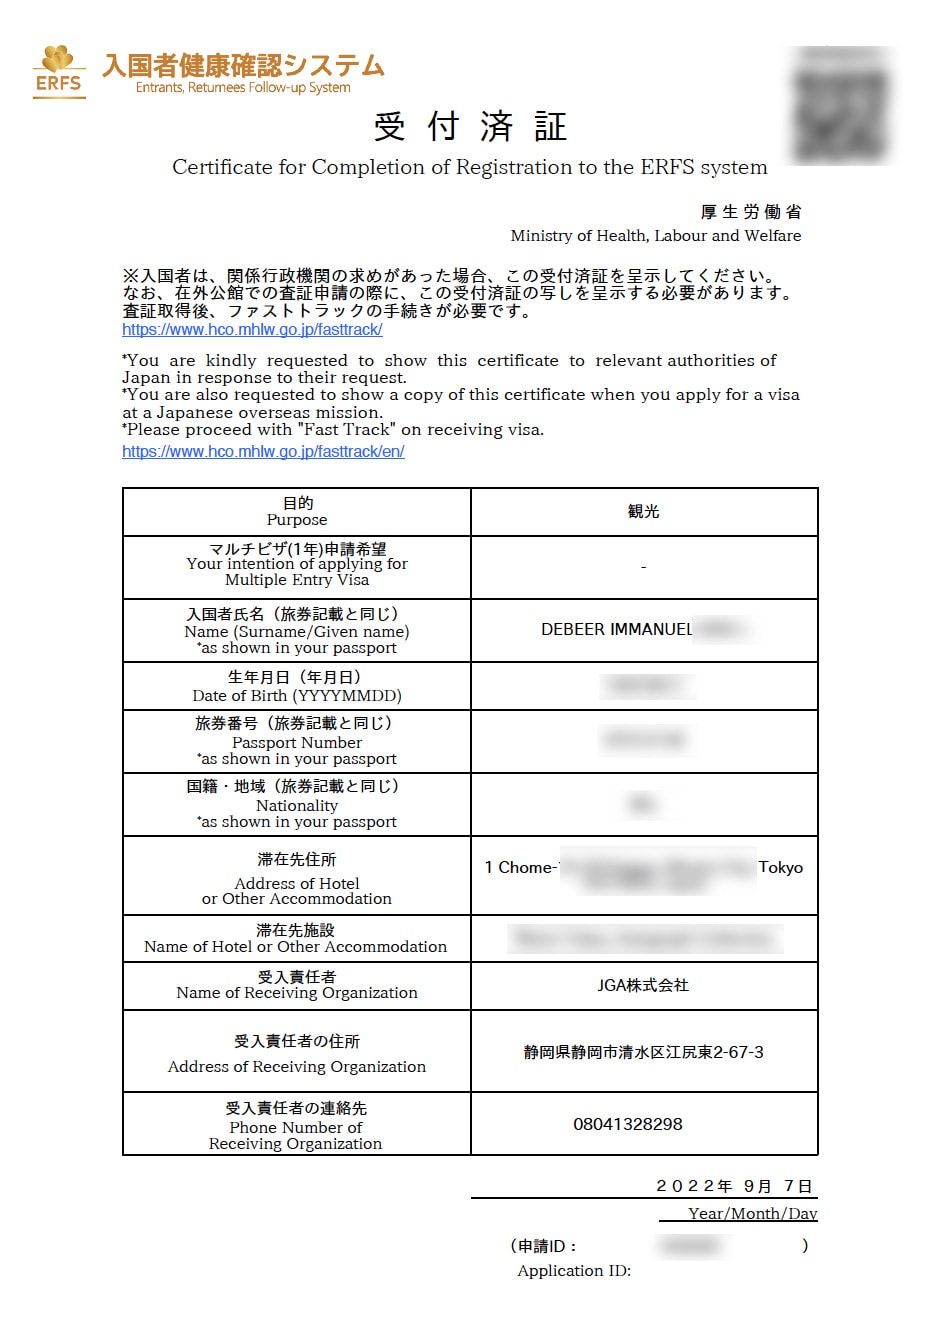 ERFS certificate japan